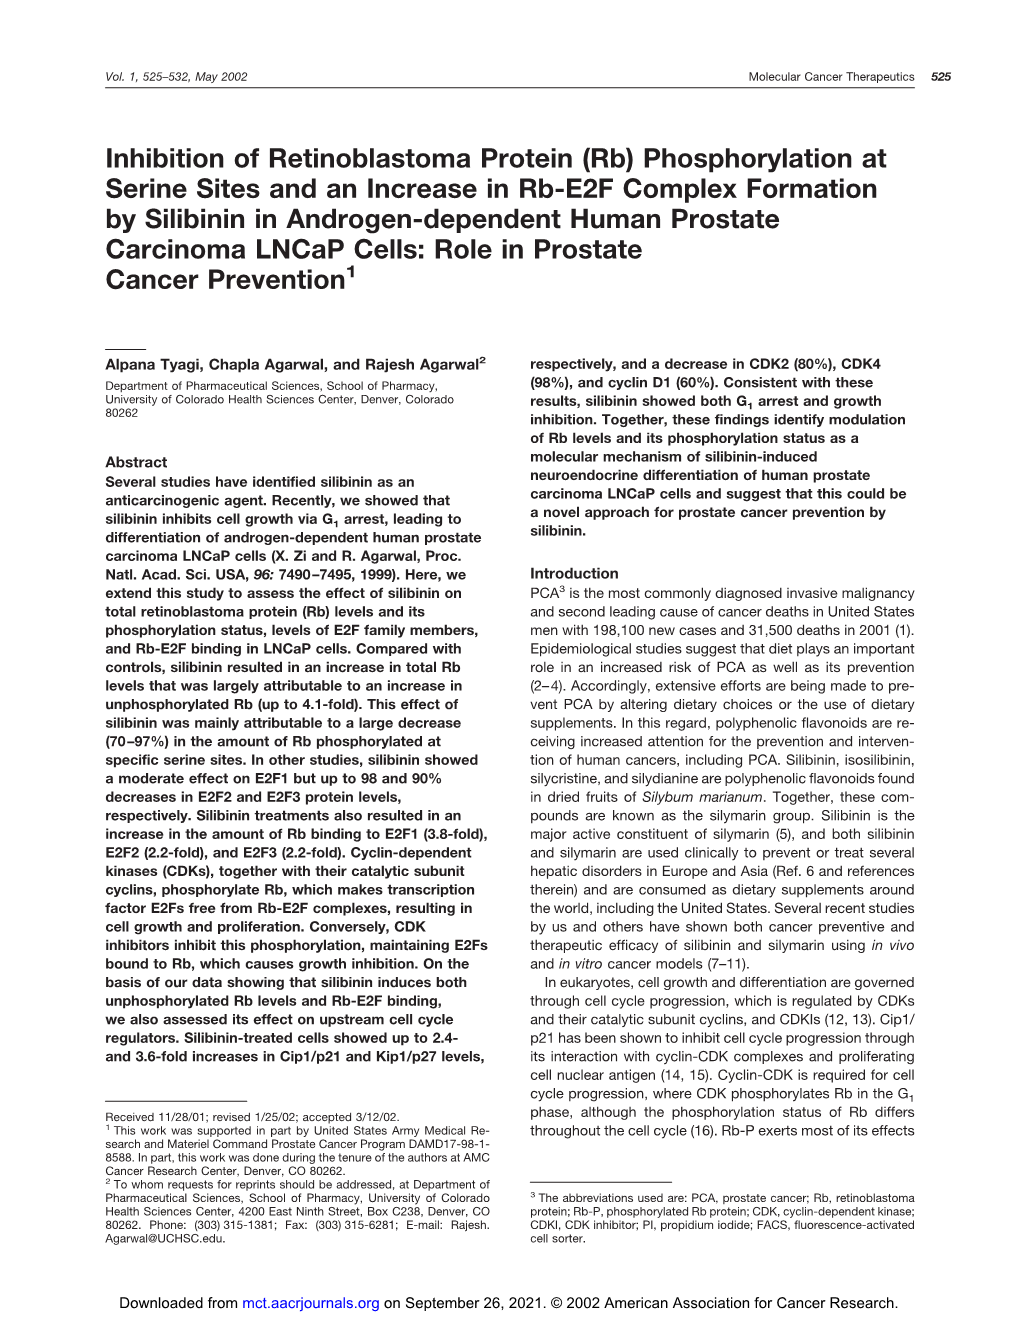 Inhibition of Retinoblastoma Protein (Rb)